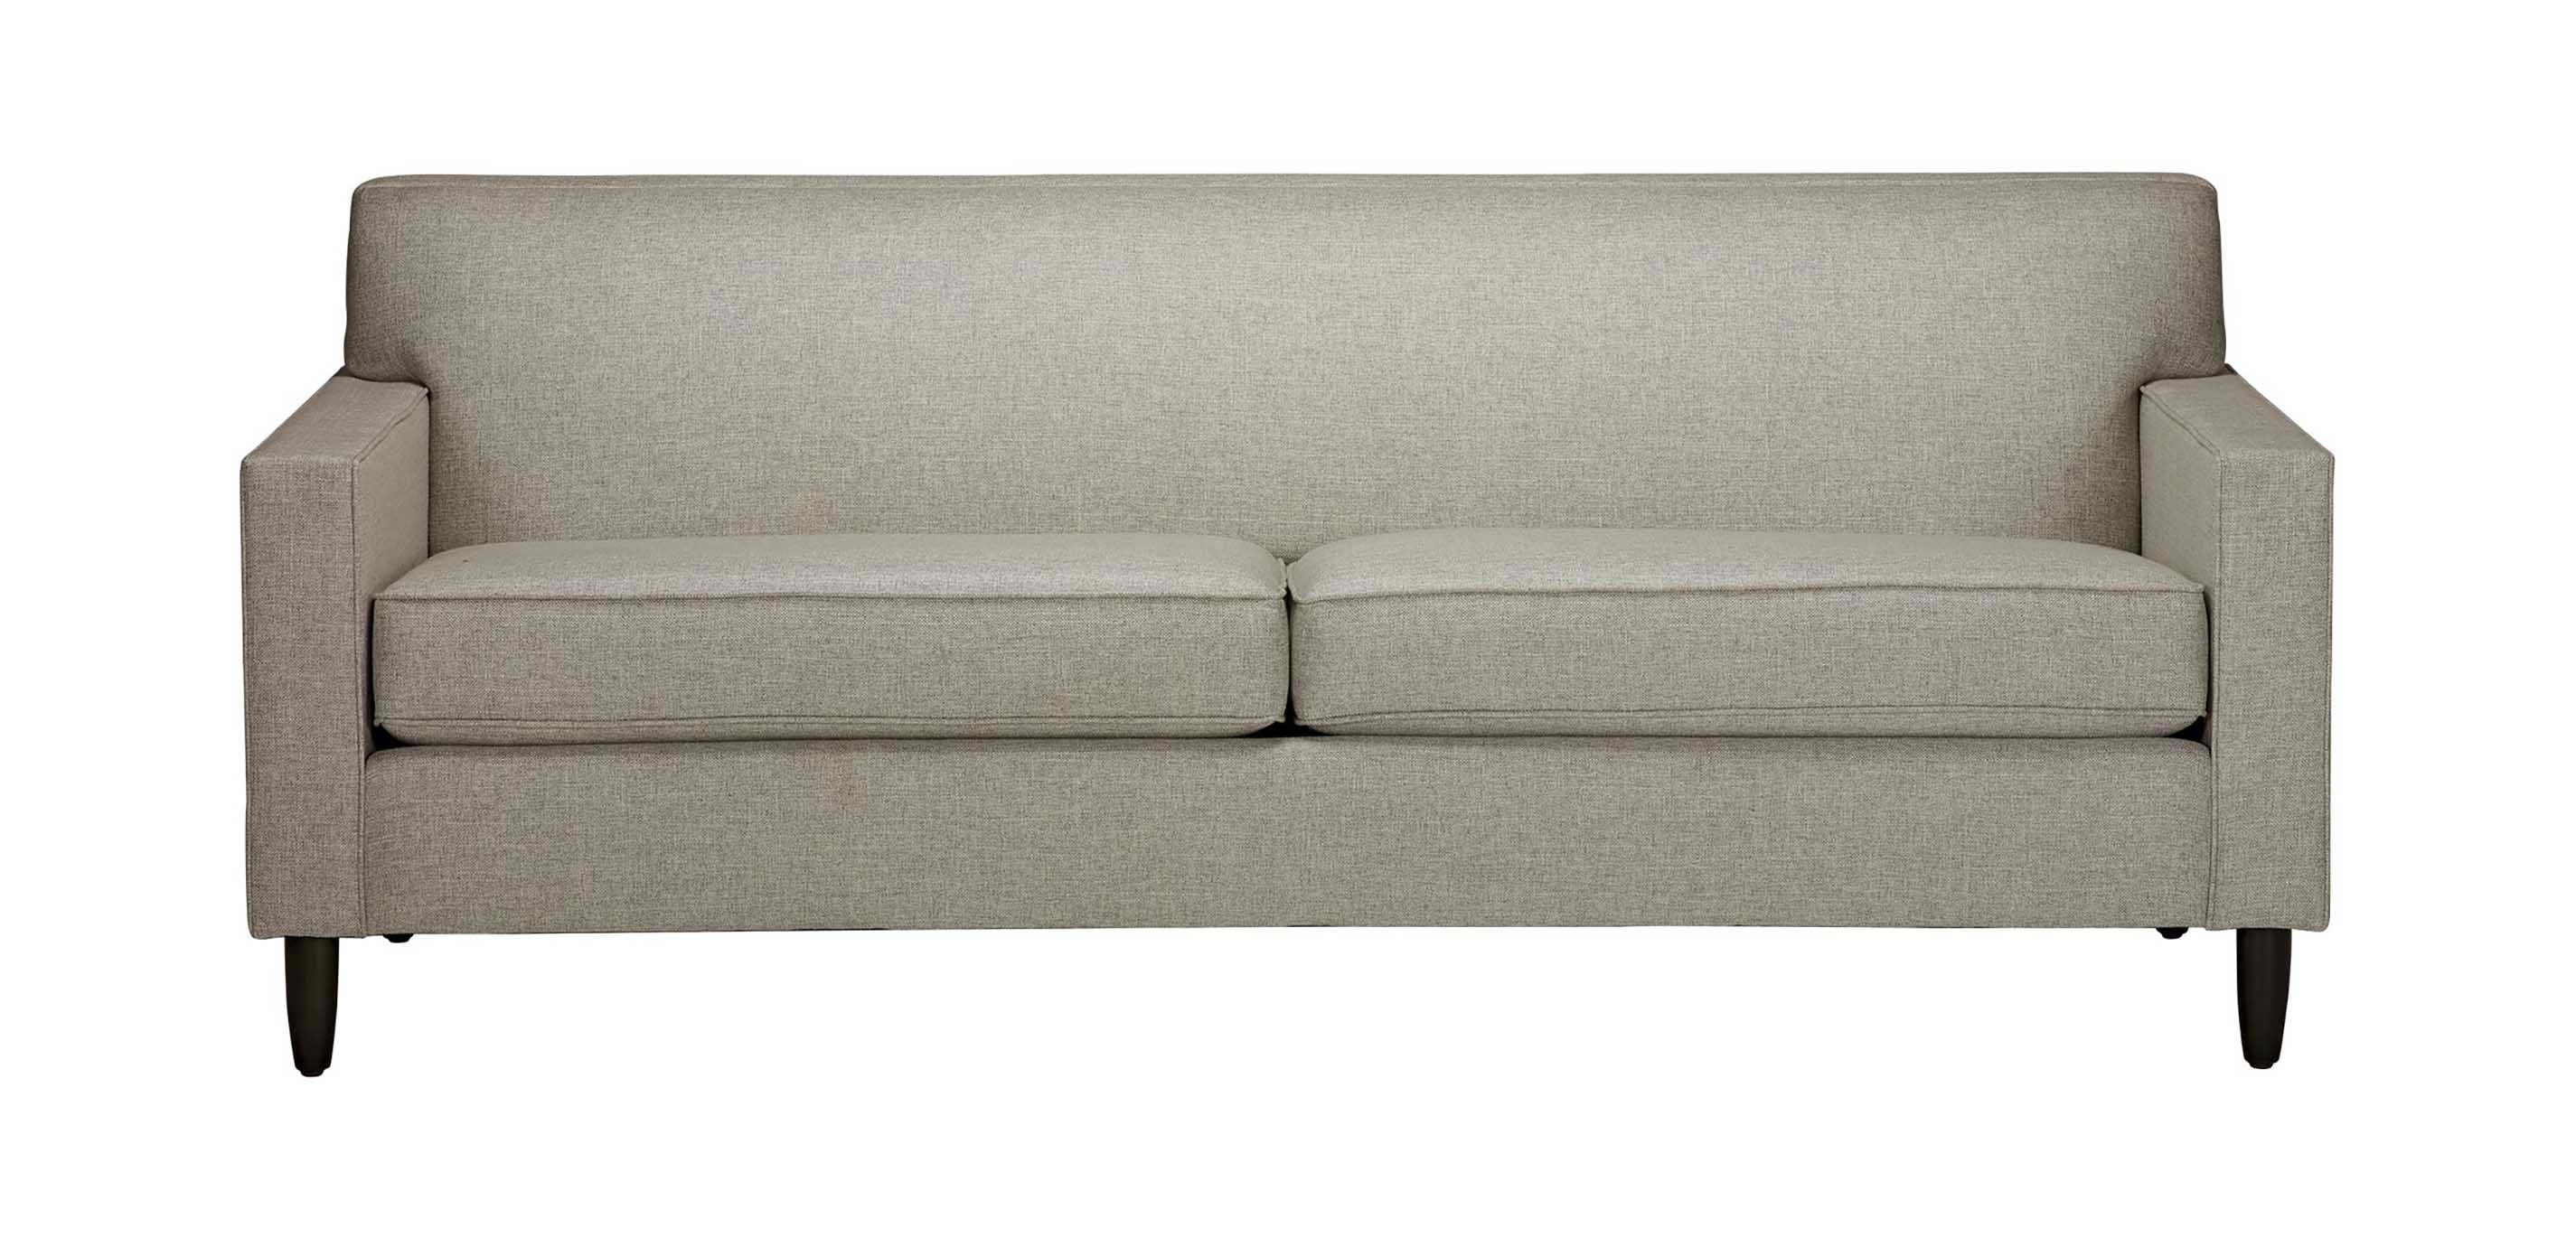 urban leather marcus sofa